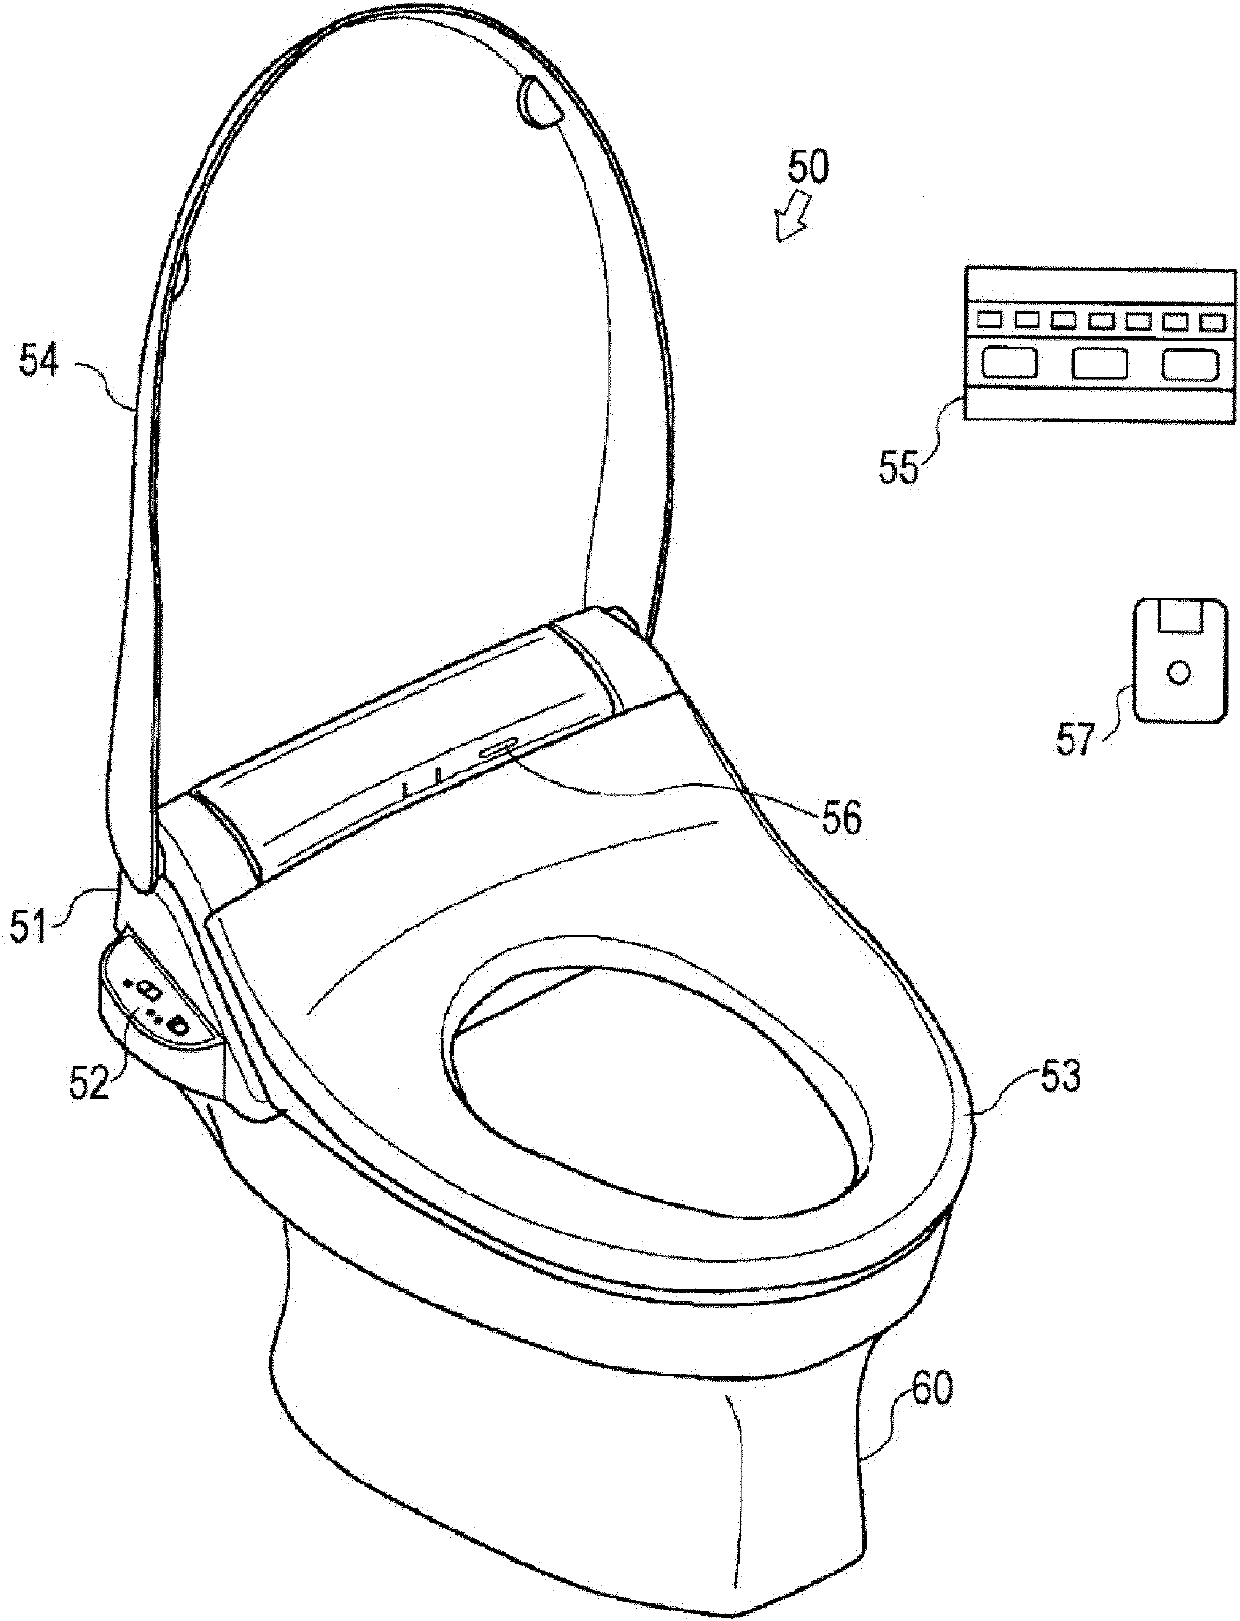 Toilet seat device